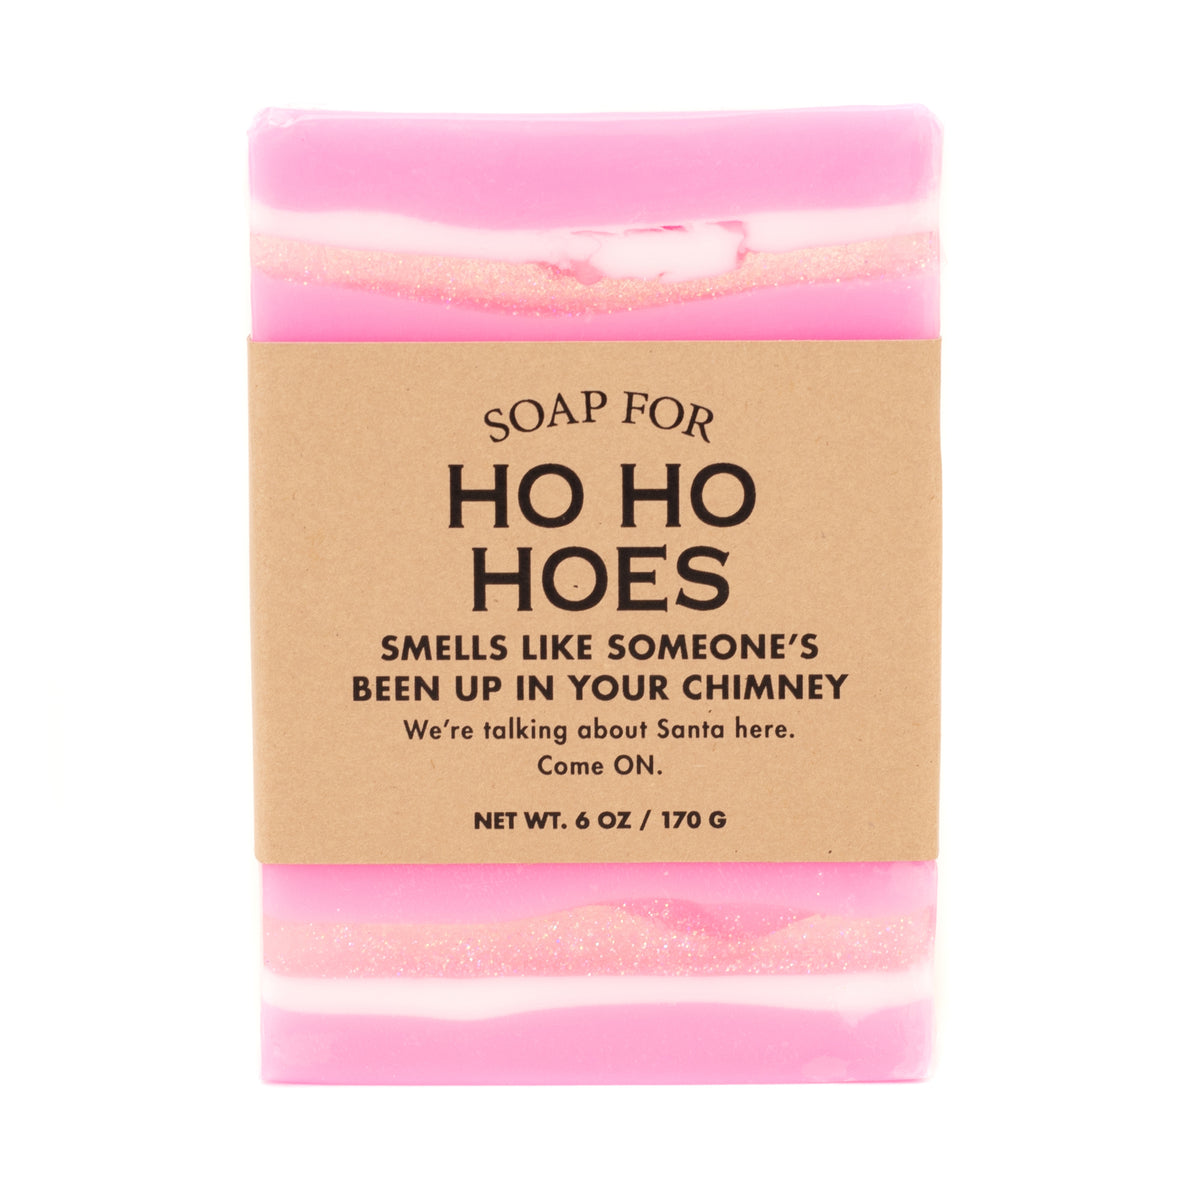 A Soap For Ho Ho Hoes